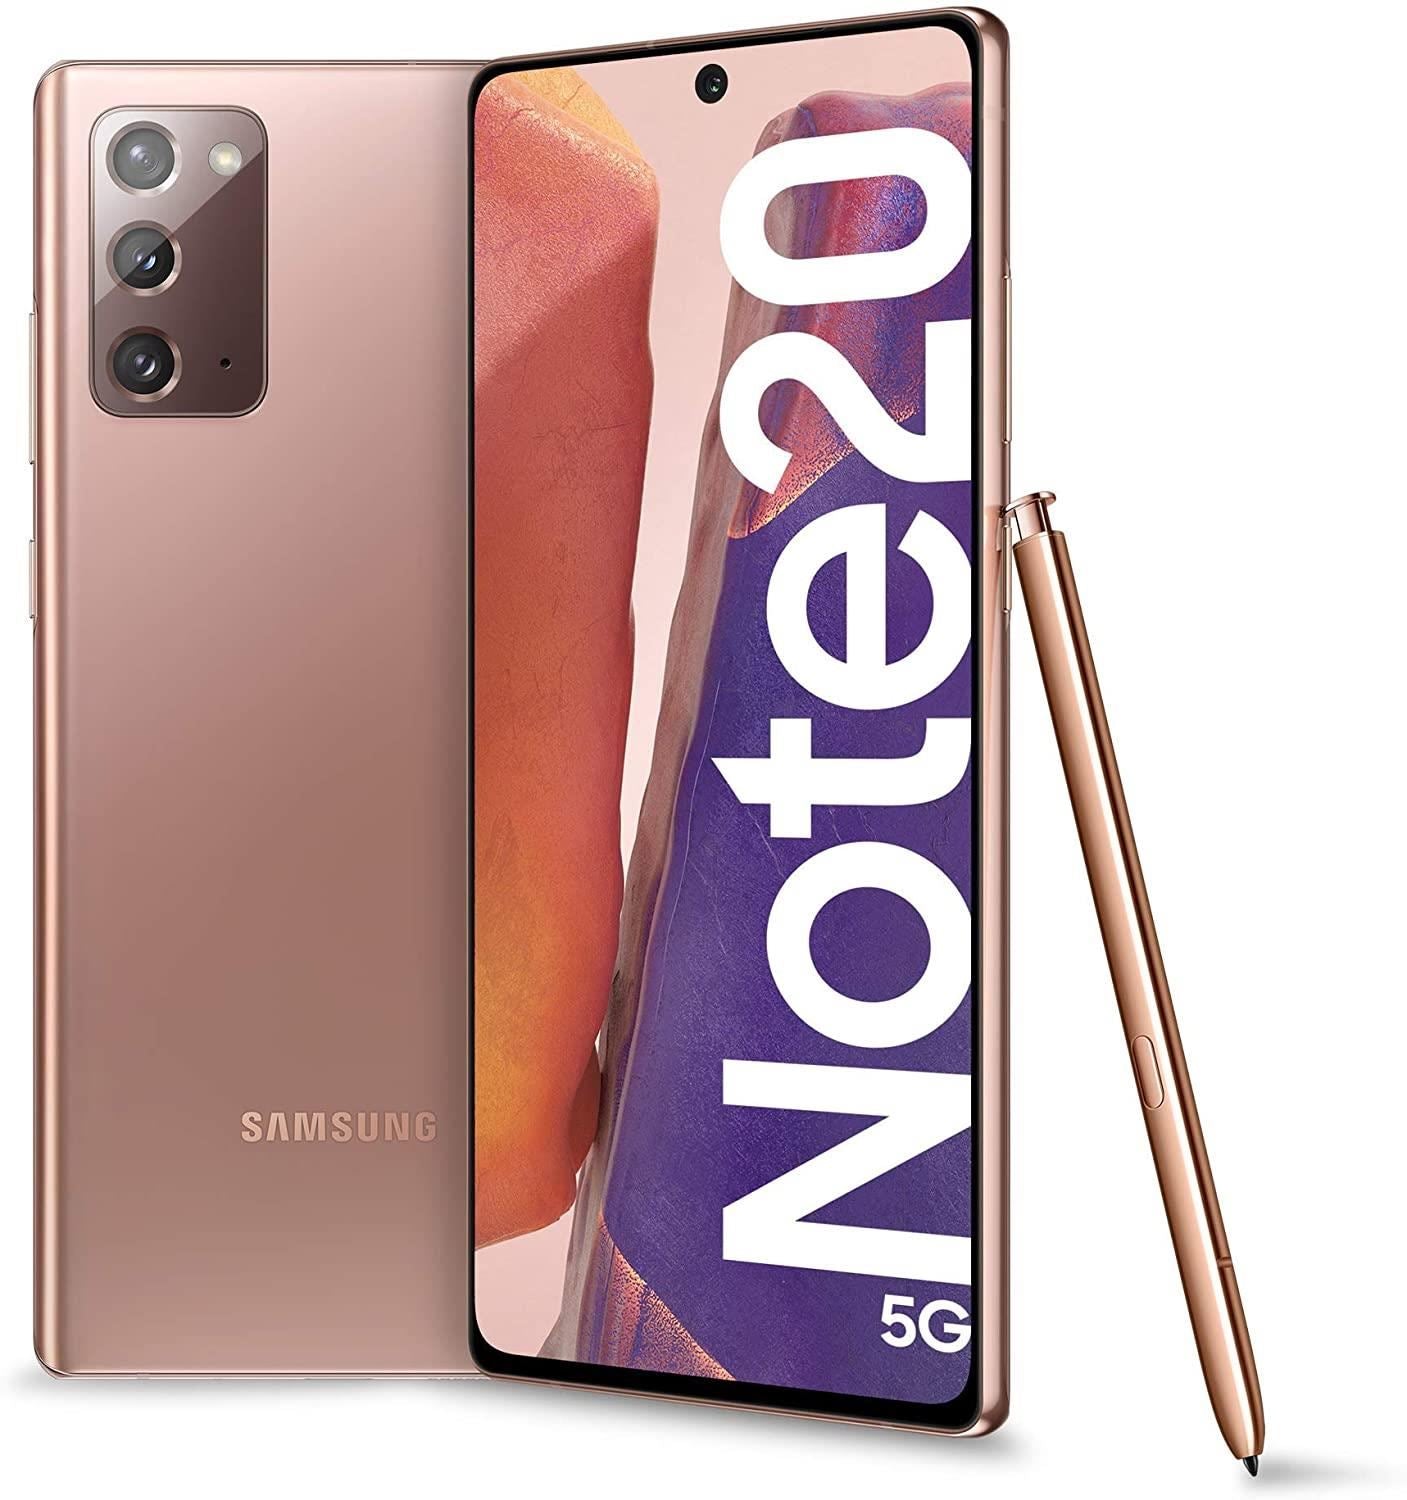 Samsung Galaxy Note20 5G Smartphone Unlocked 128-256GB